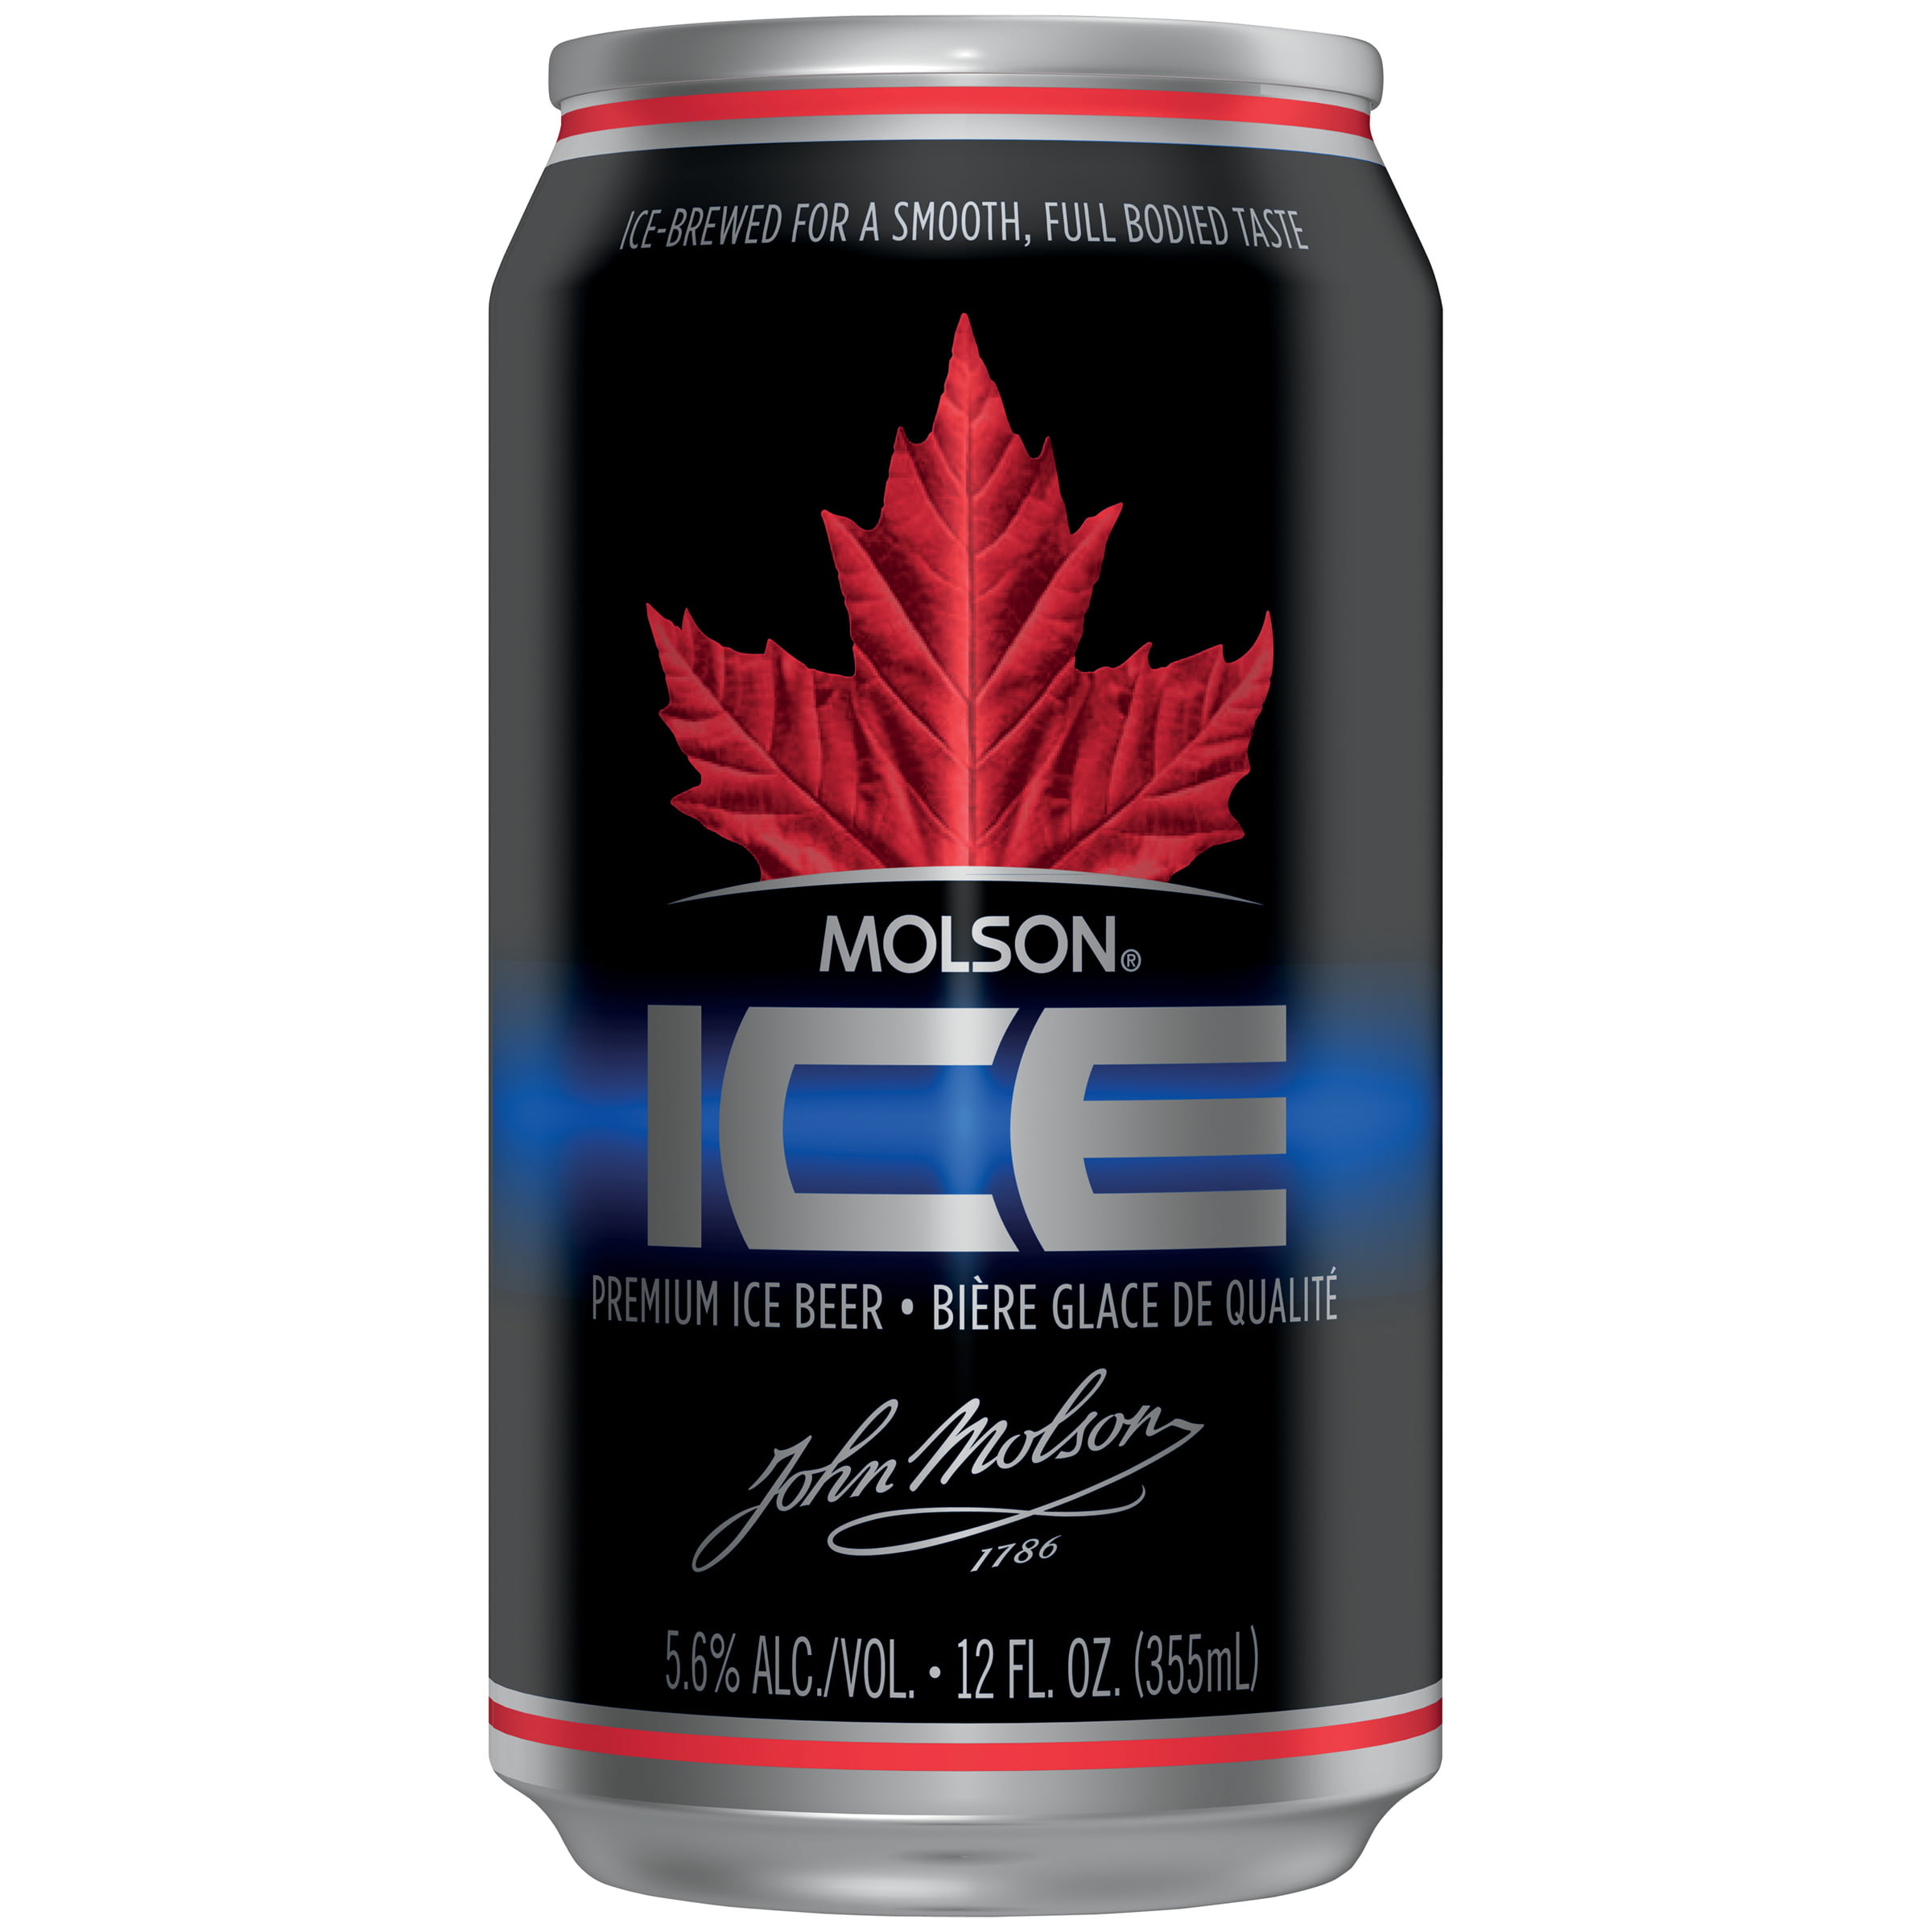 Айс бир. Пиво Molson. Molson Ice Beer. Molson Canadian. Molson Dry Beer.